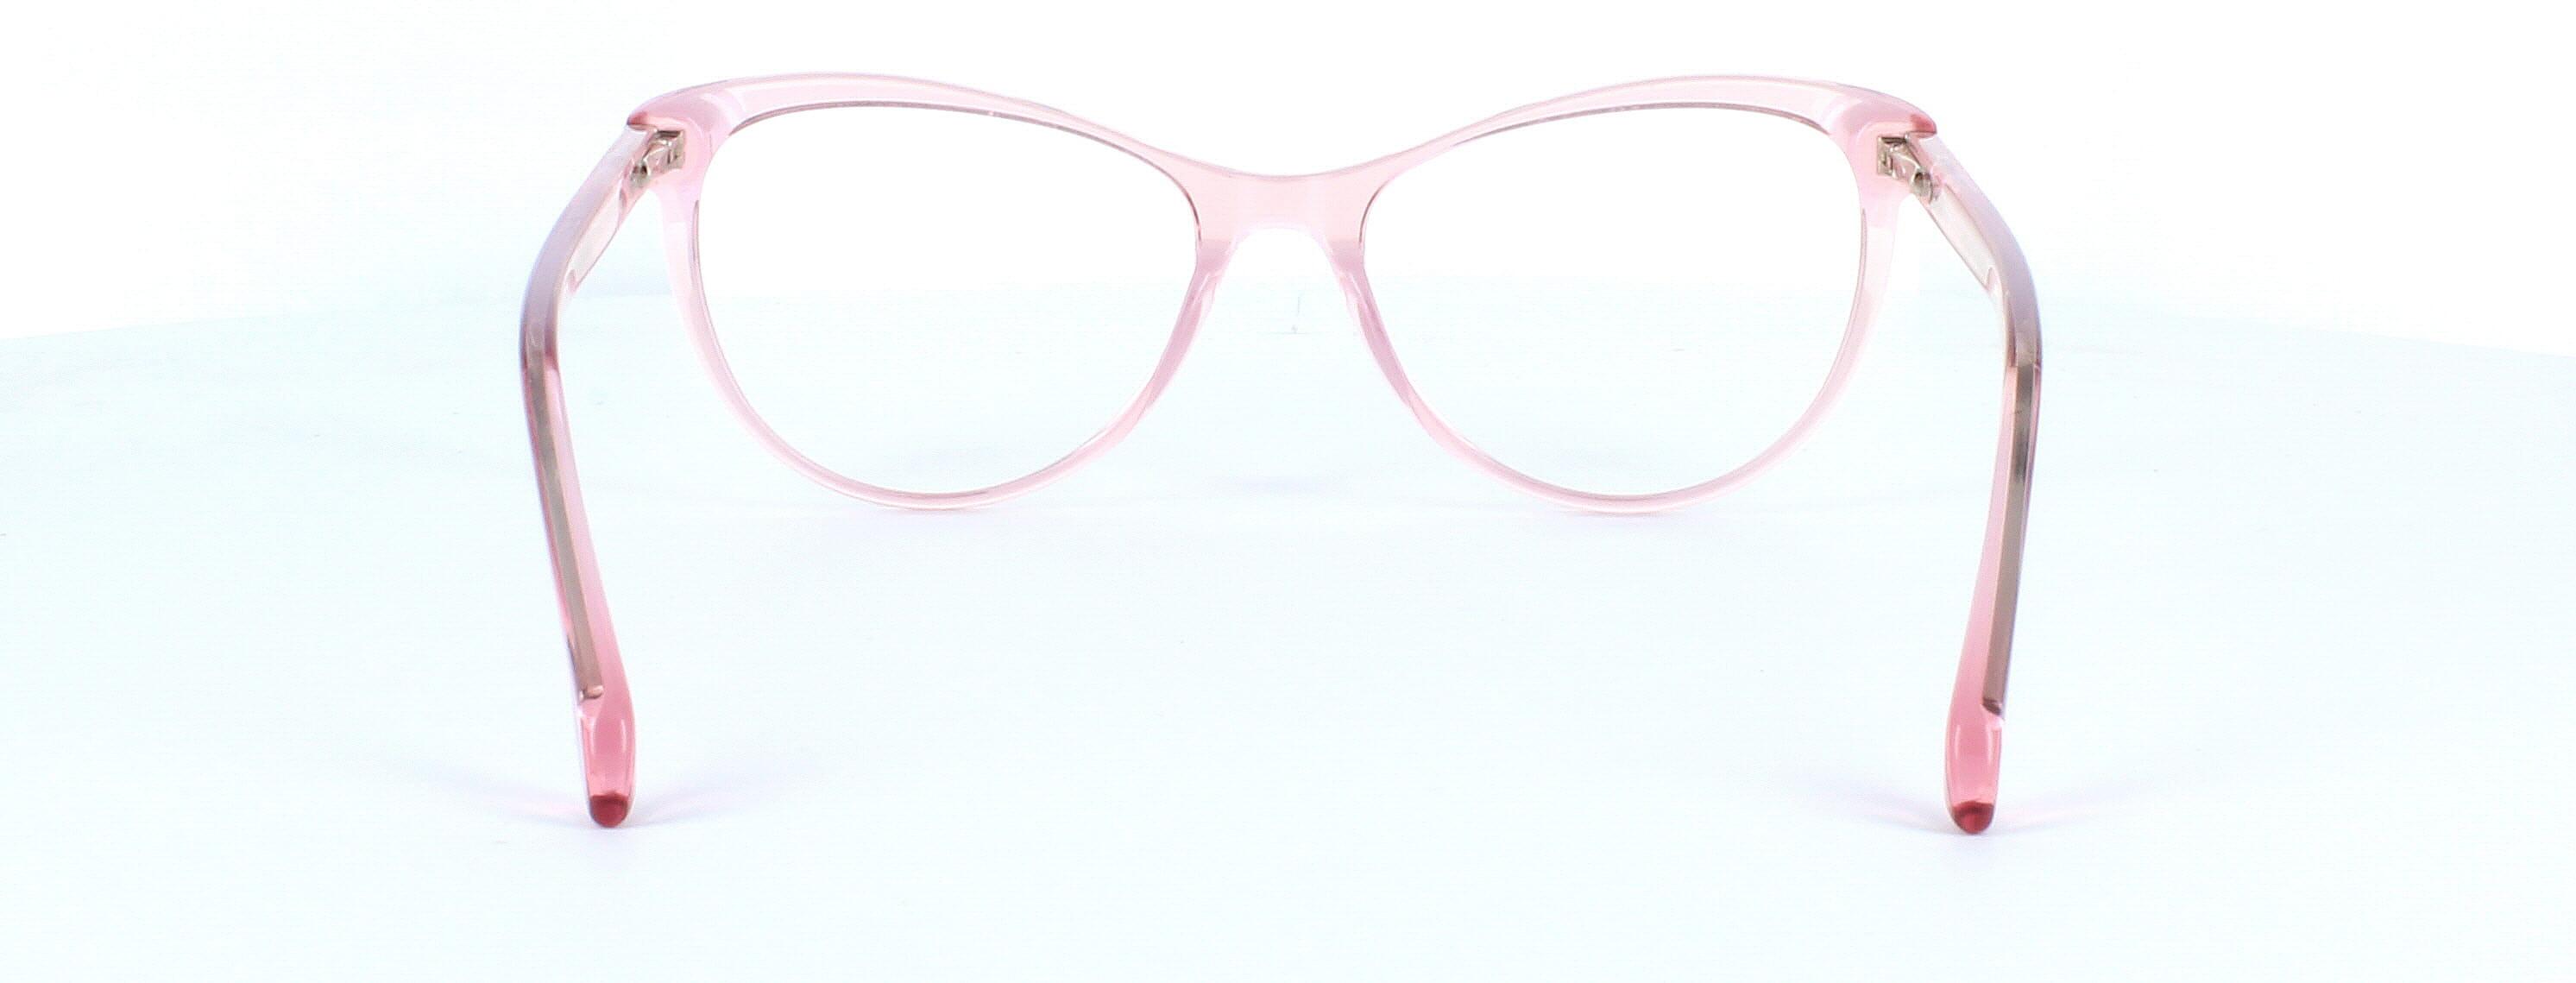 Hadlow - Ladies crystal pink cat eye shaped acetate glasses frame - image view 3